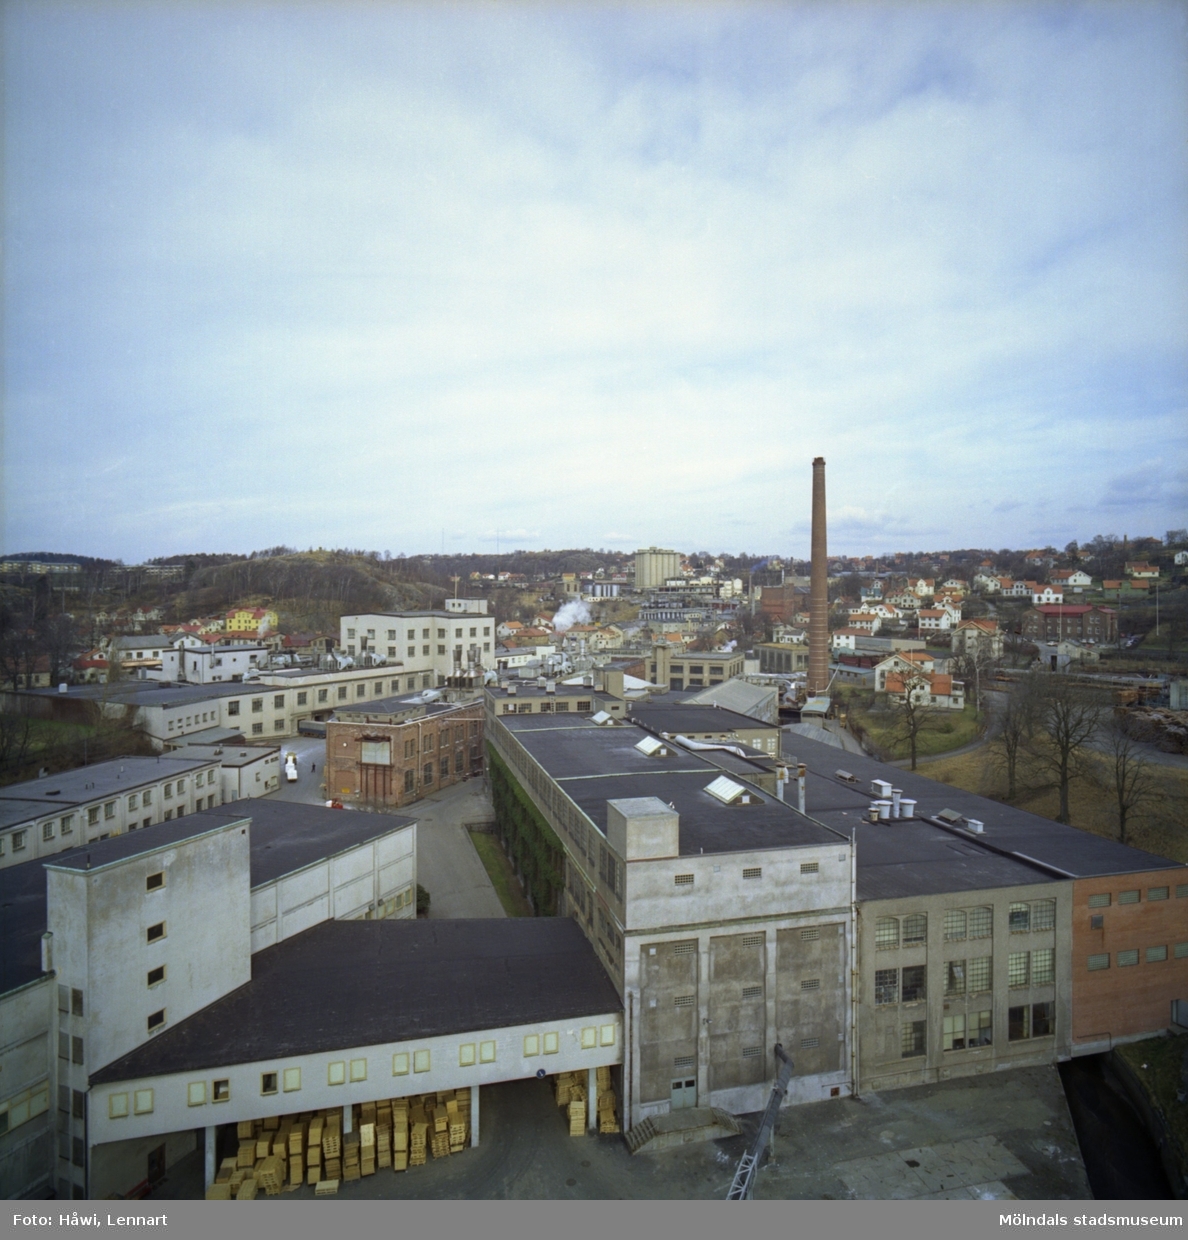 Pappersbruket Papyrus fabriksområde i Mölndal.